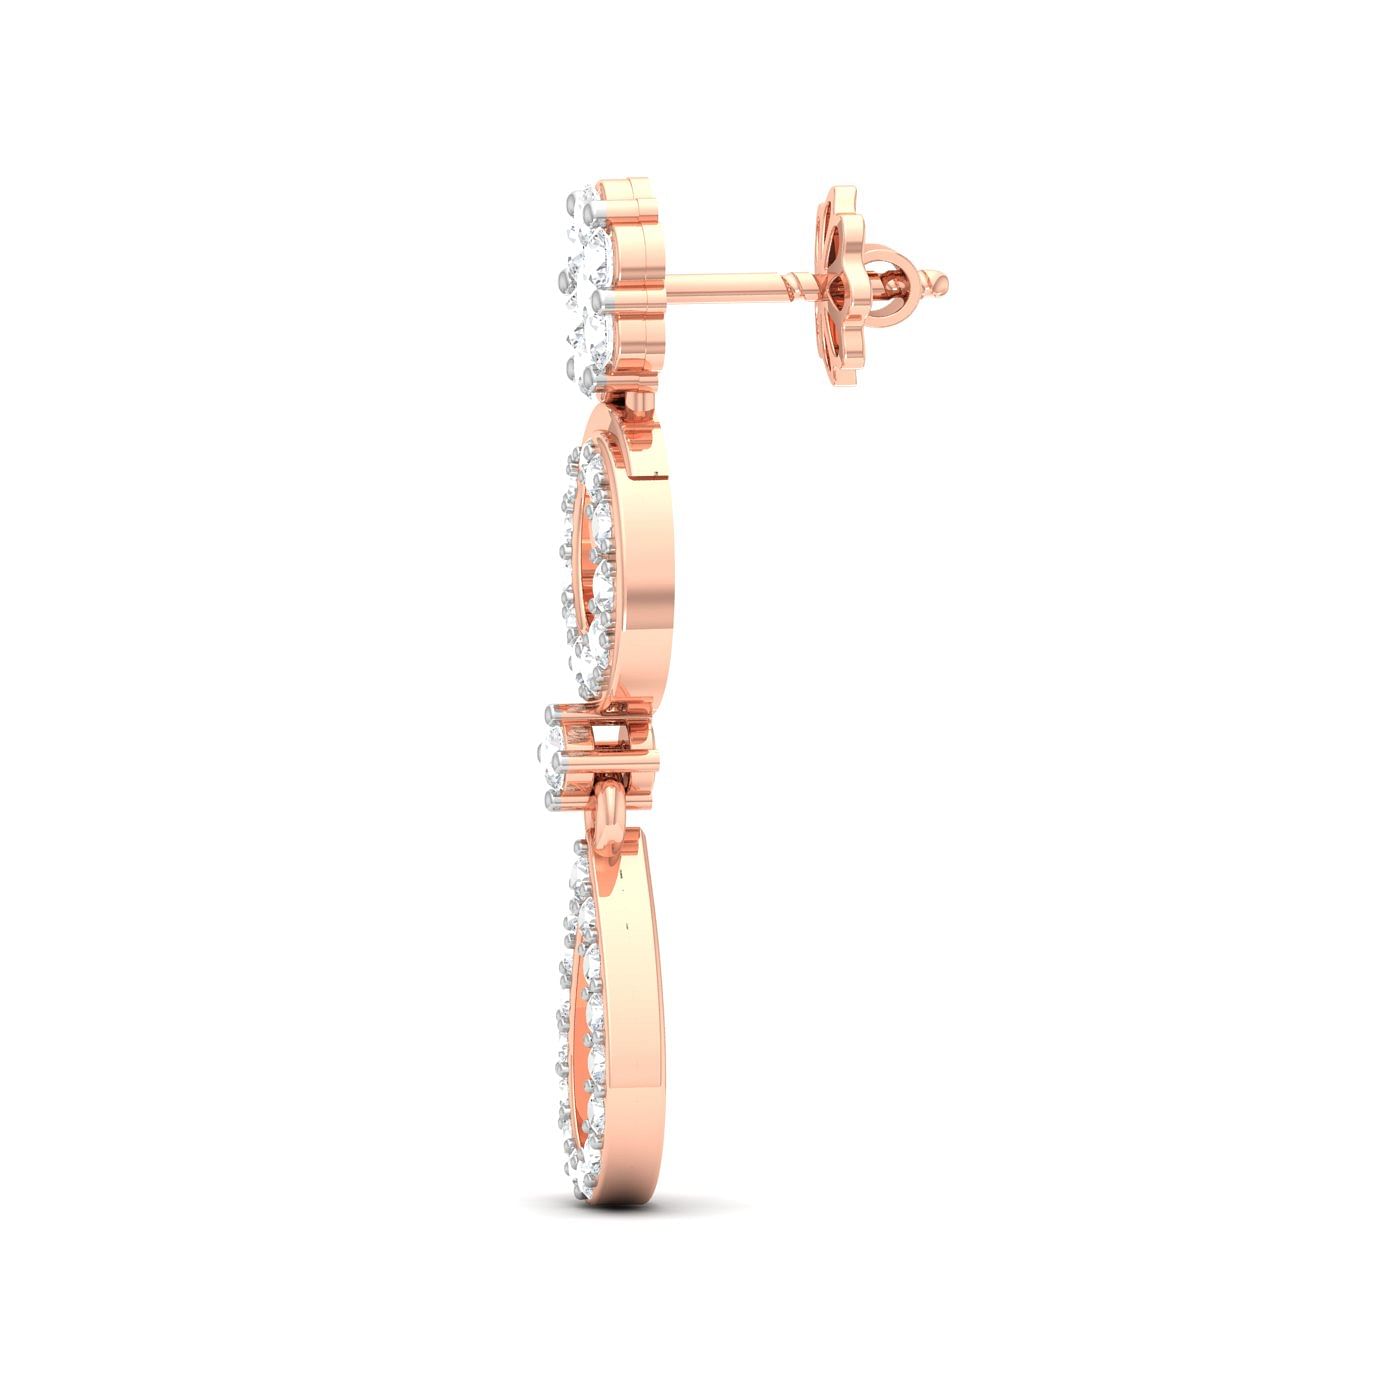 oval diamond drop earrings in rose gold for wedding